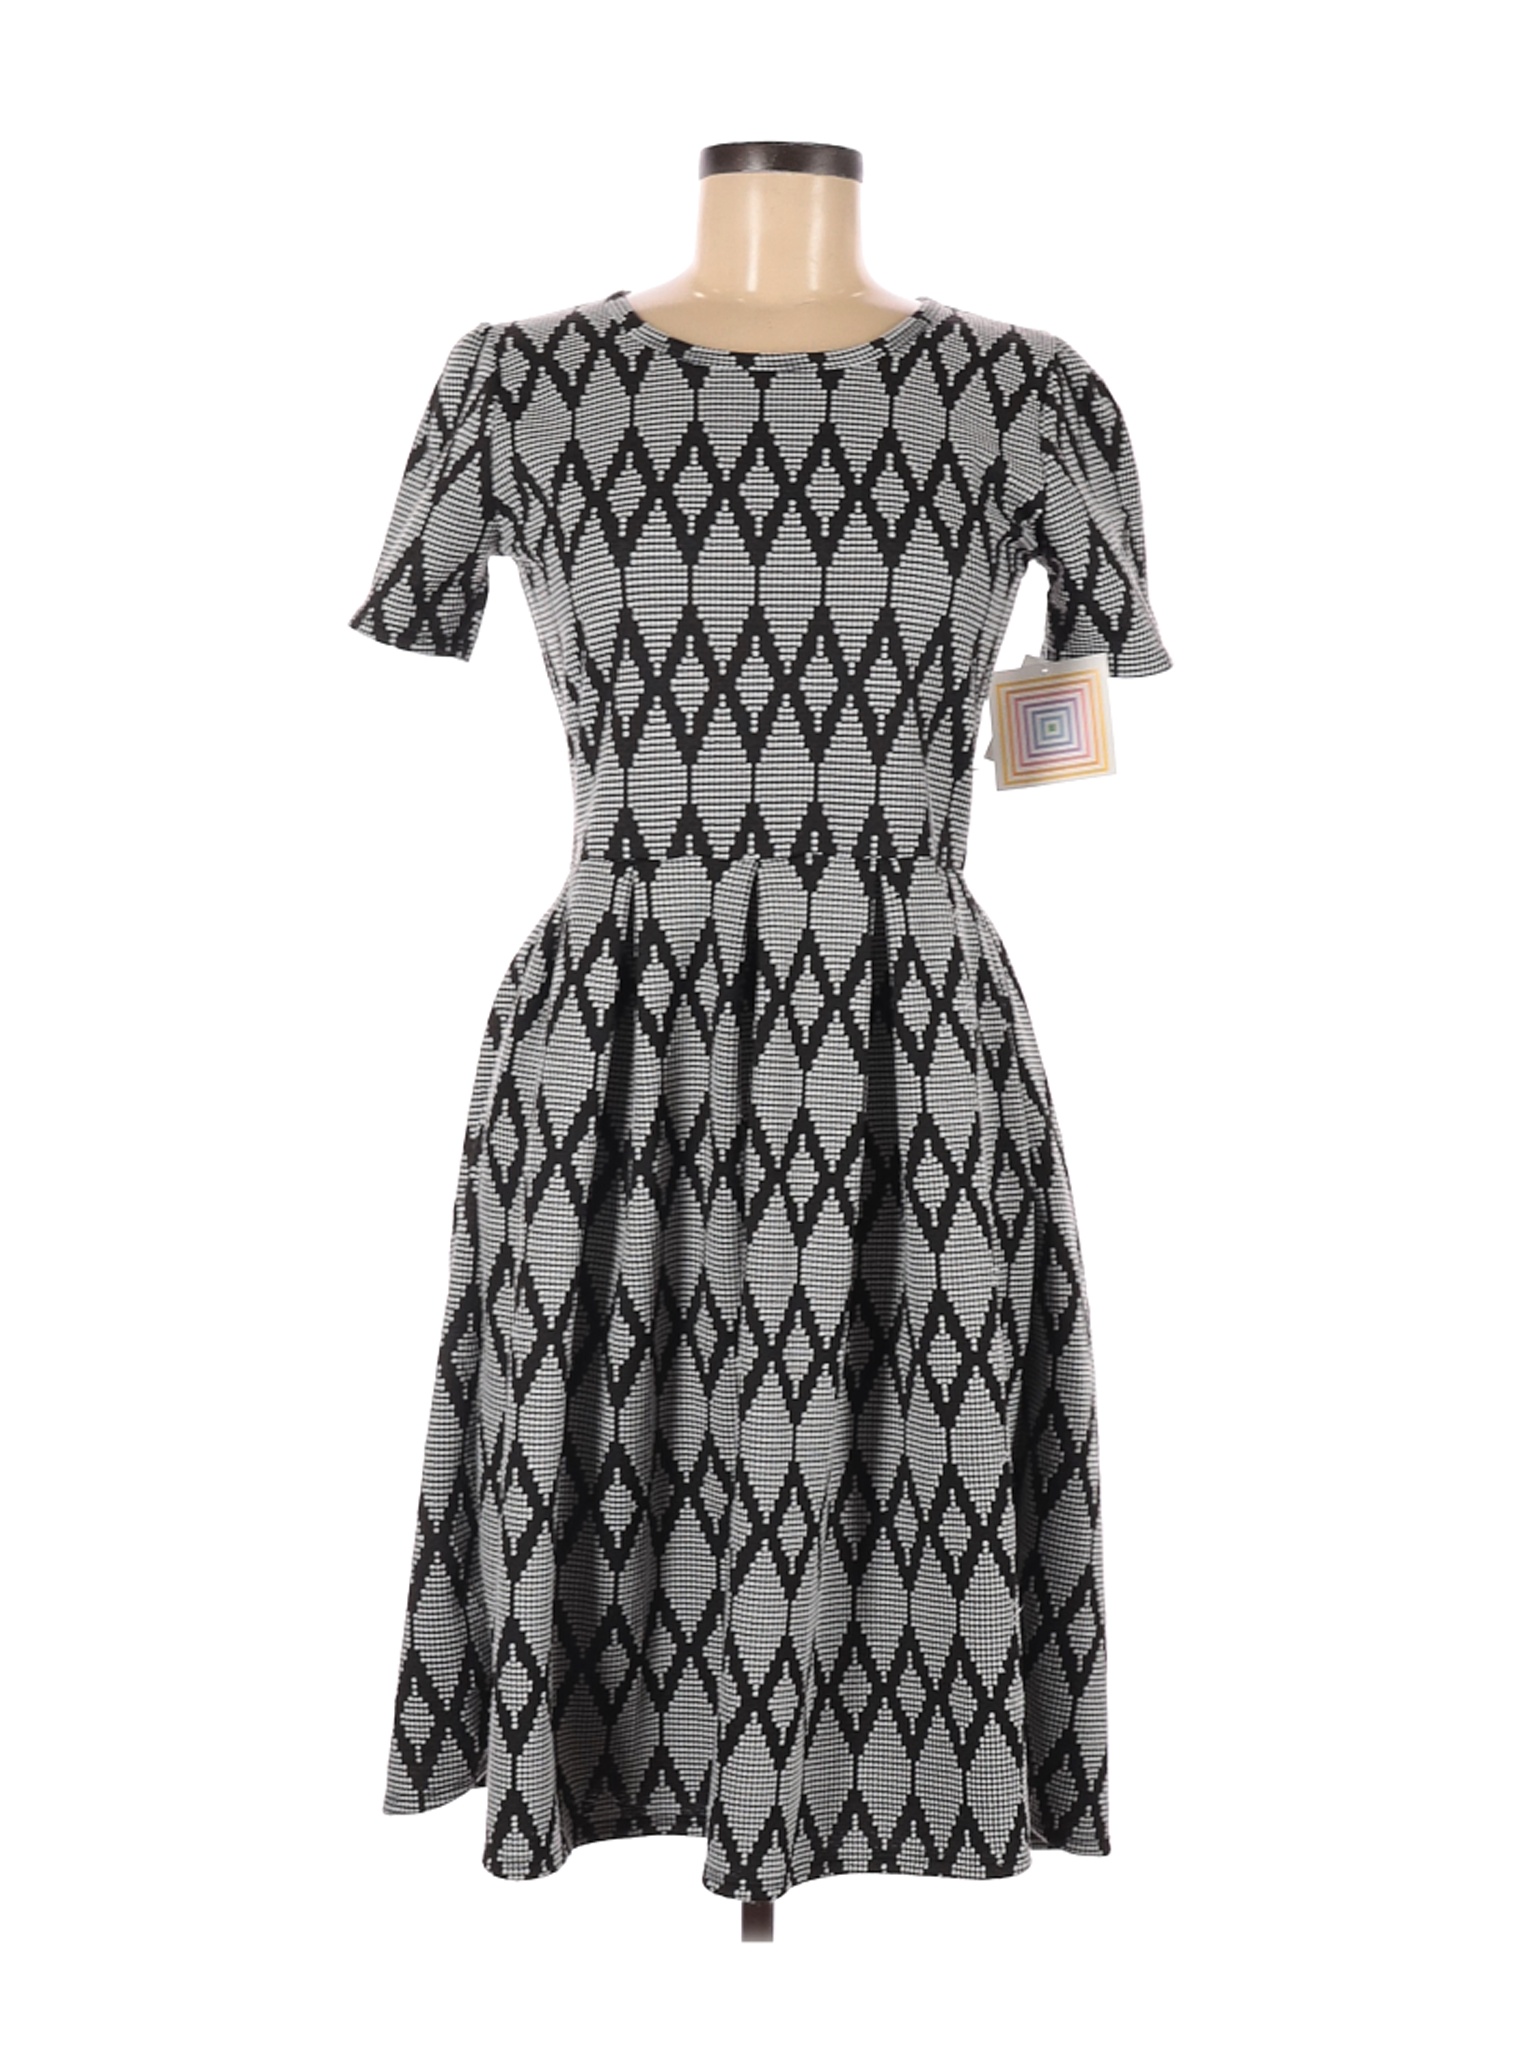 NWT Lularoe Women Black Casual Dress M | eBay